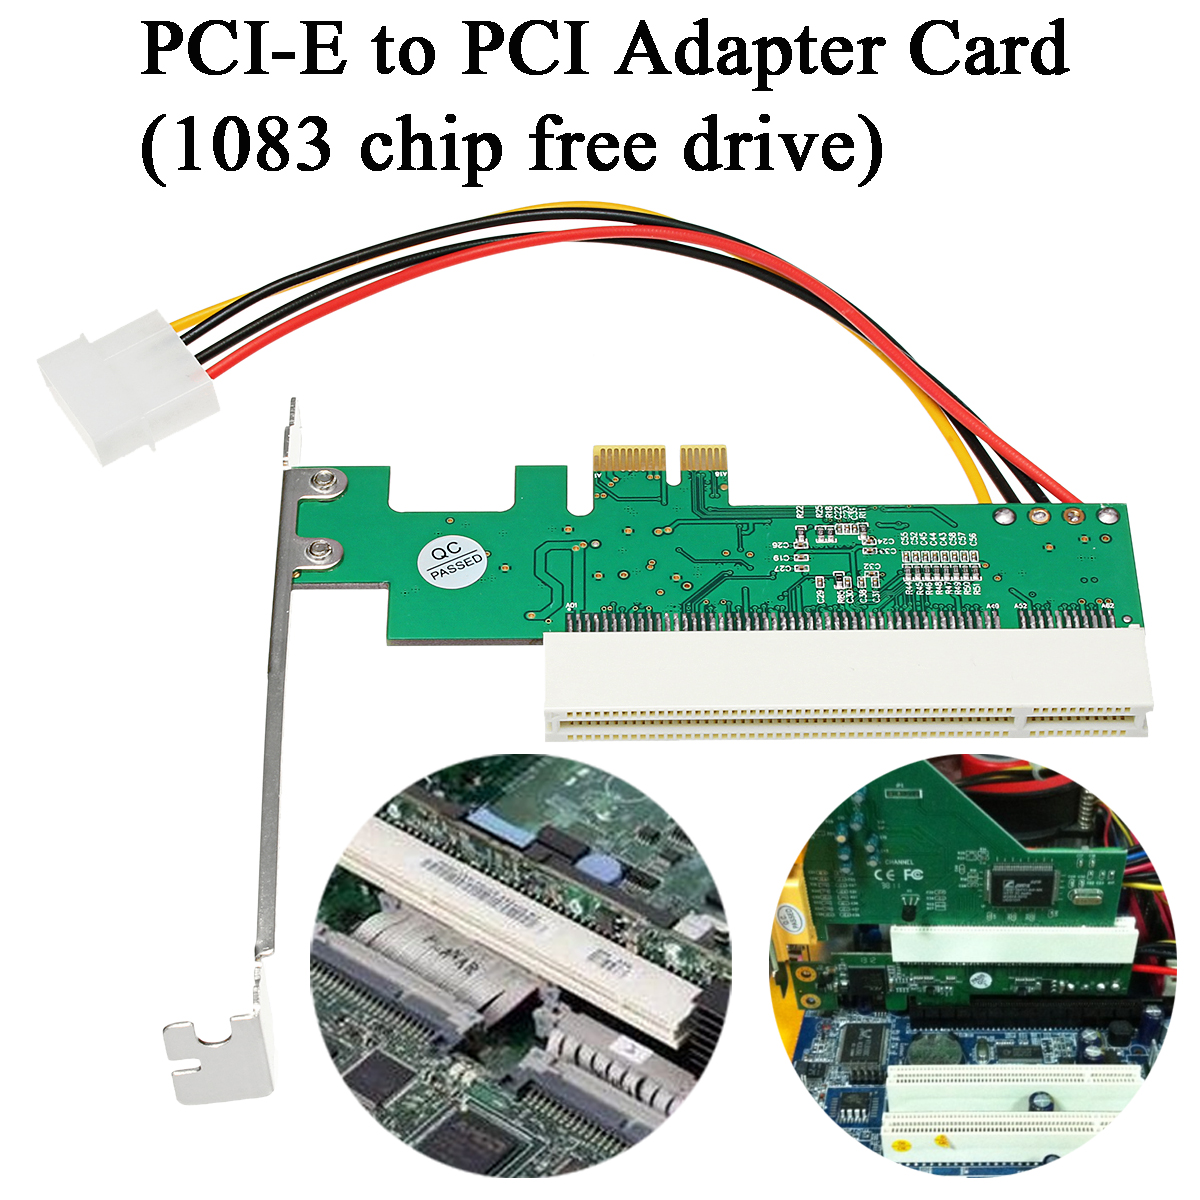 PCI драйвер. PCI Express пост карта. PCIW драйвер. Mini PCI Express распиновка. Pci карта расширения